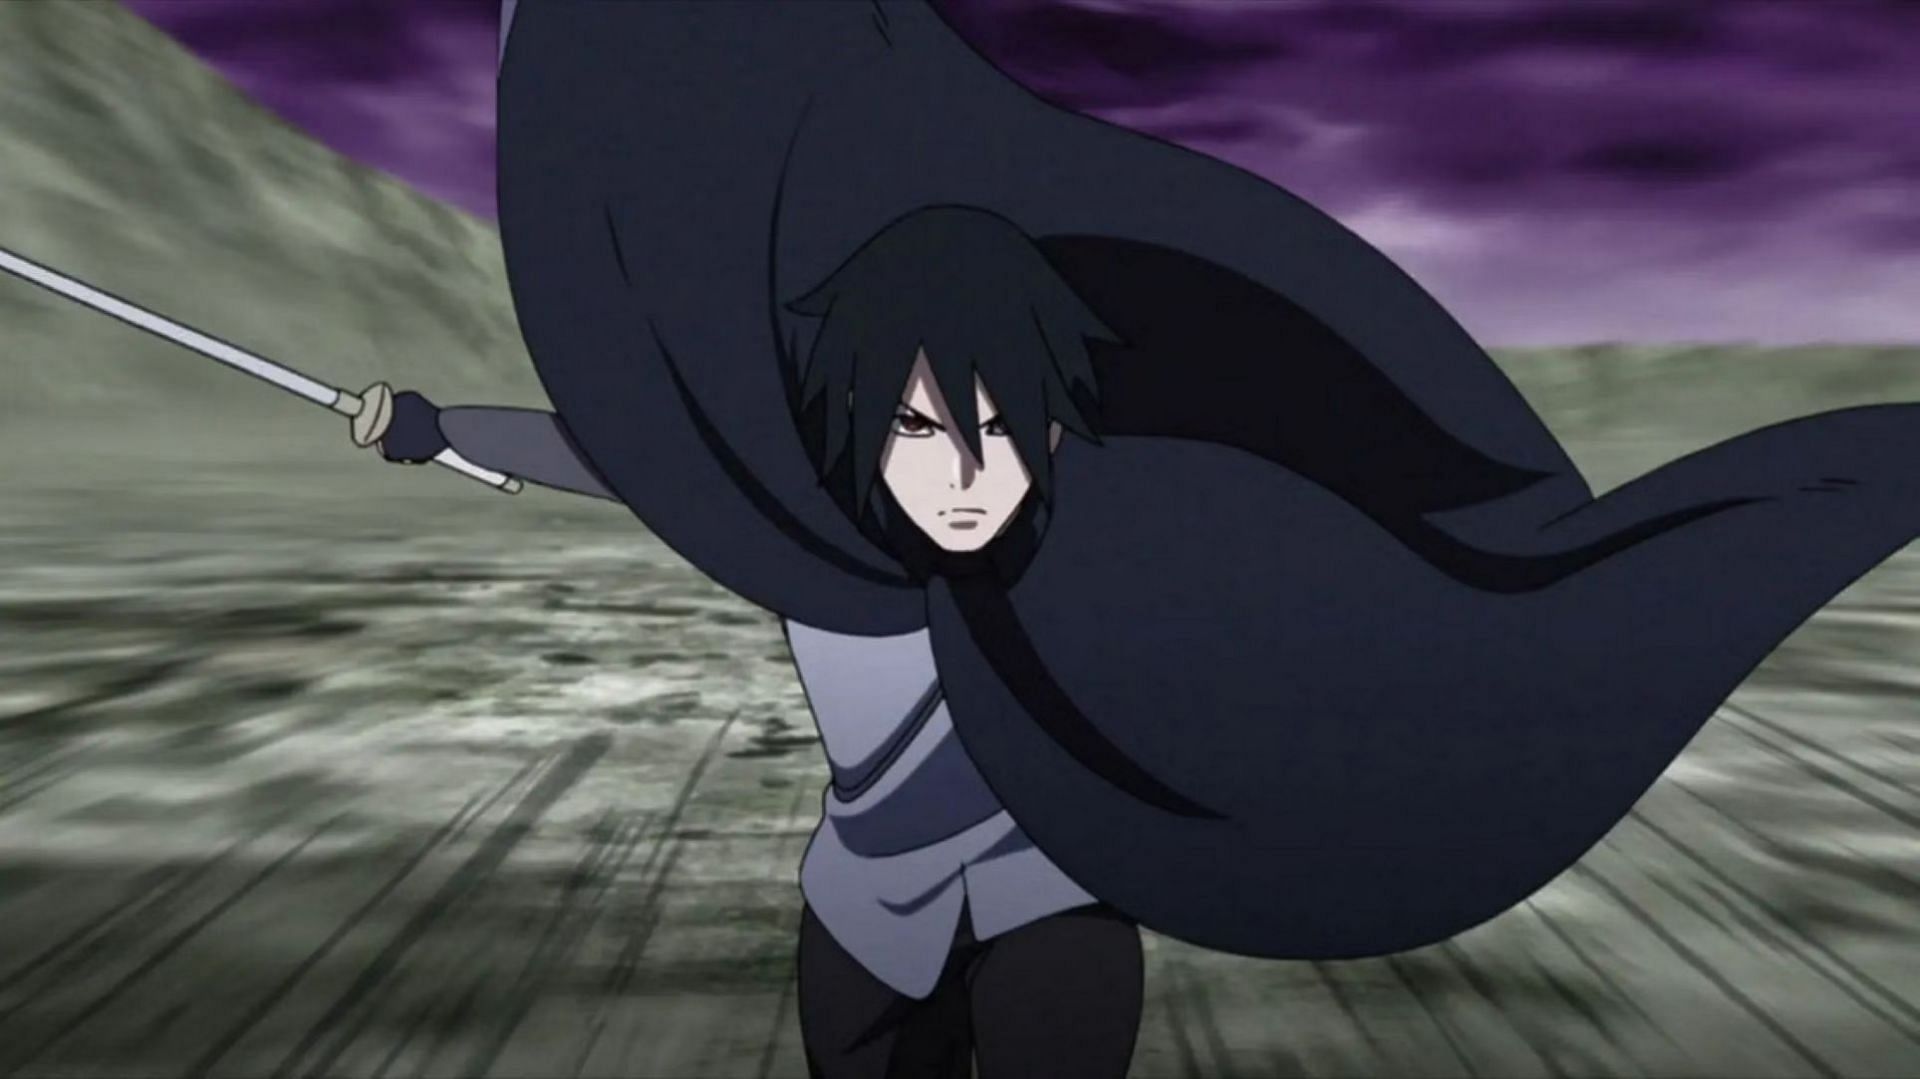 Sasuke in battle (Image via Studio Pierrot)